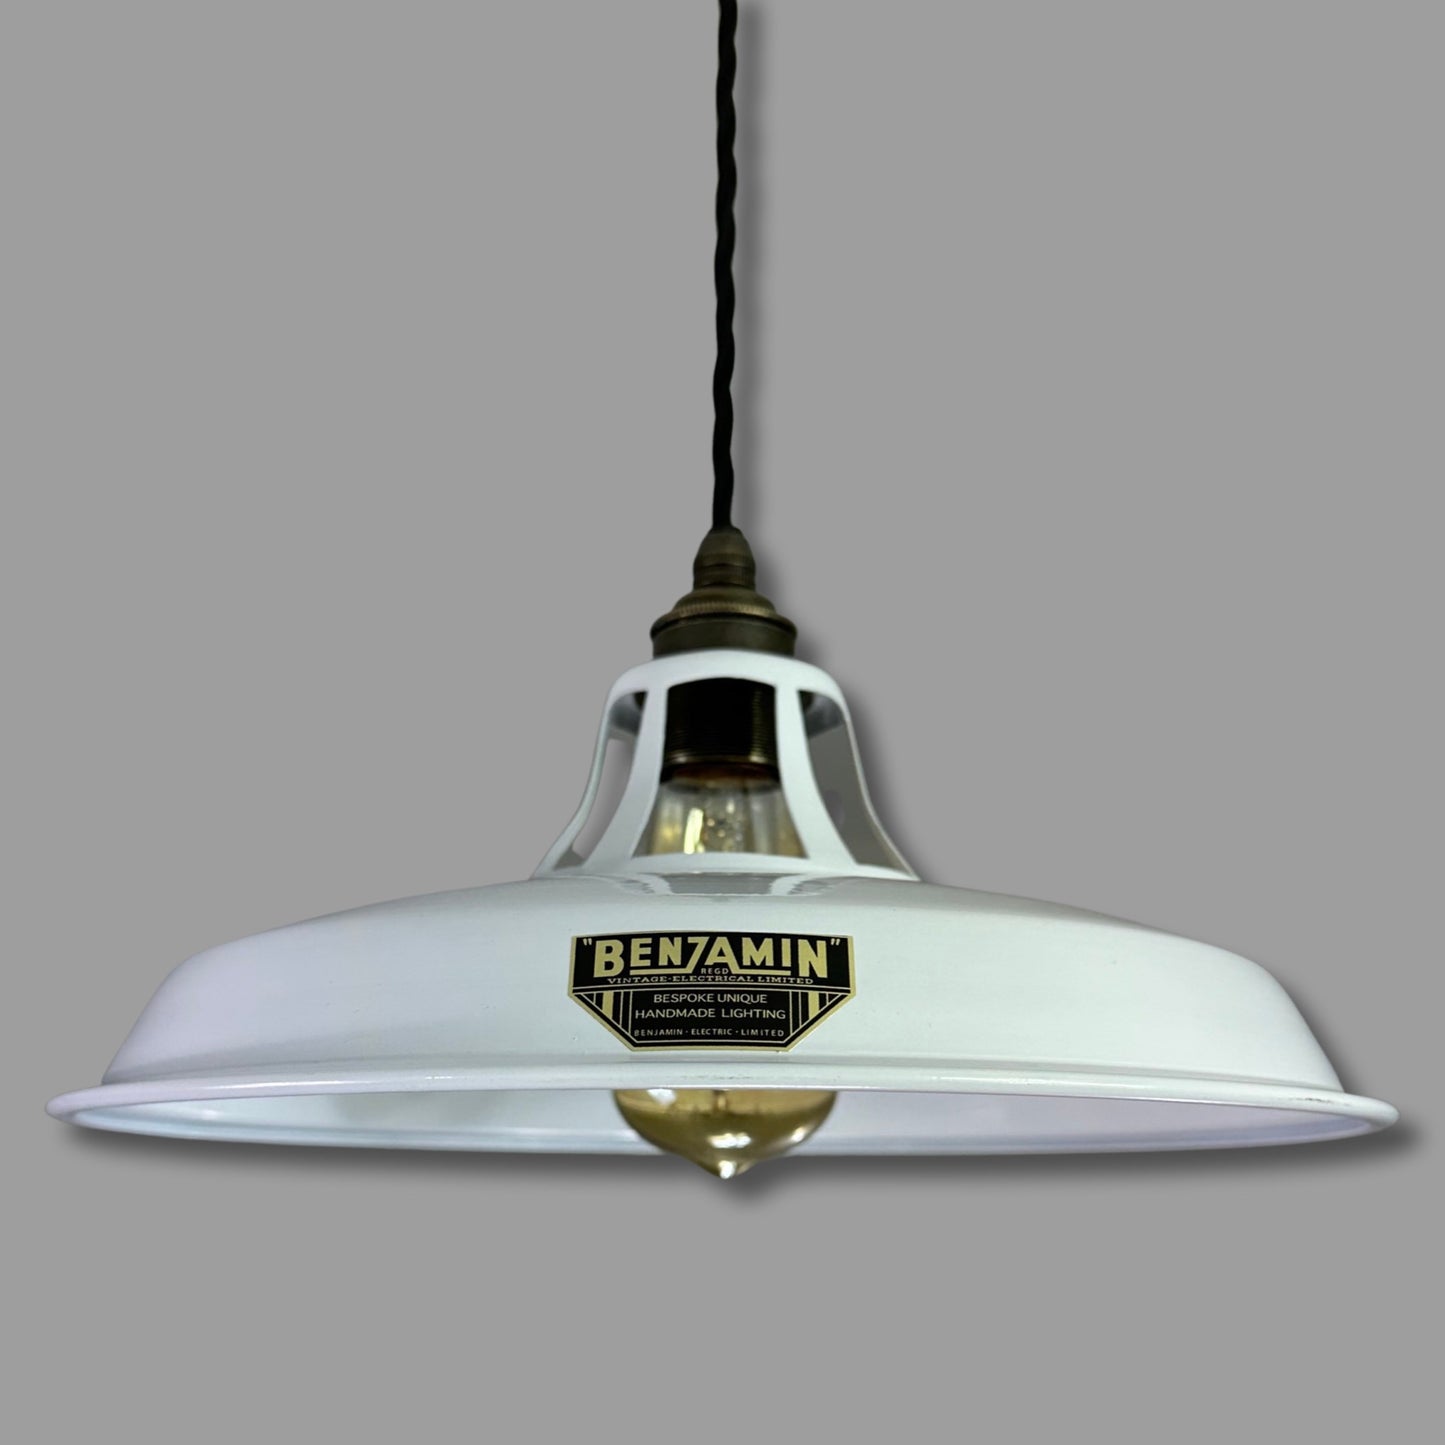 Bramerton ~ Original White Benflux Industrial Shade 1926 Design Pendant Set Light | Ceiling Dining Room | Kitchen Table | Vintage